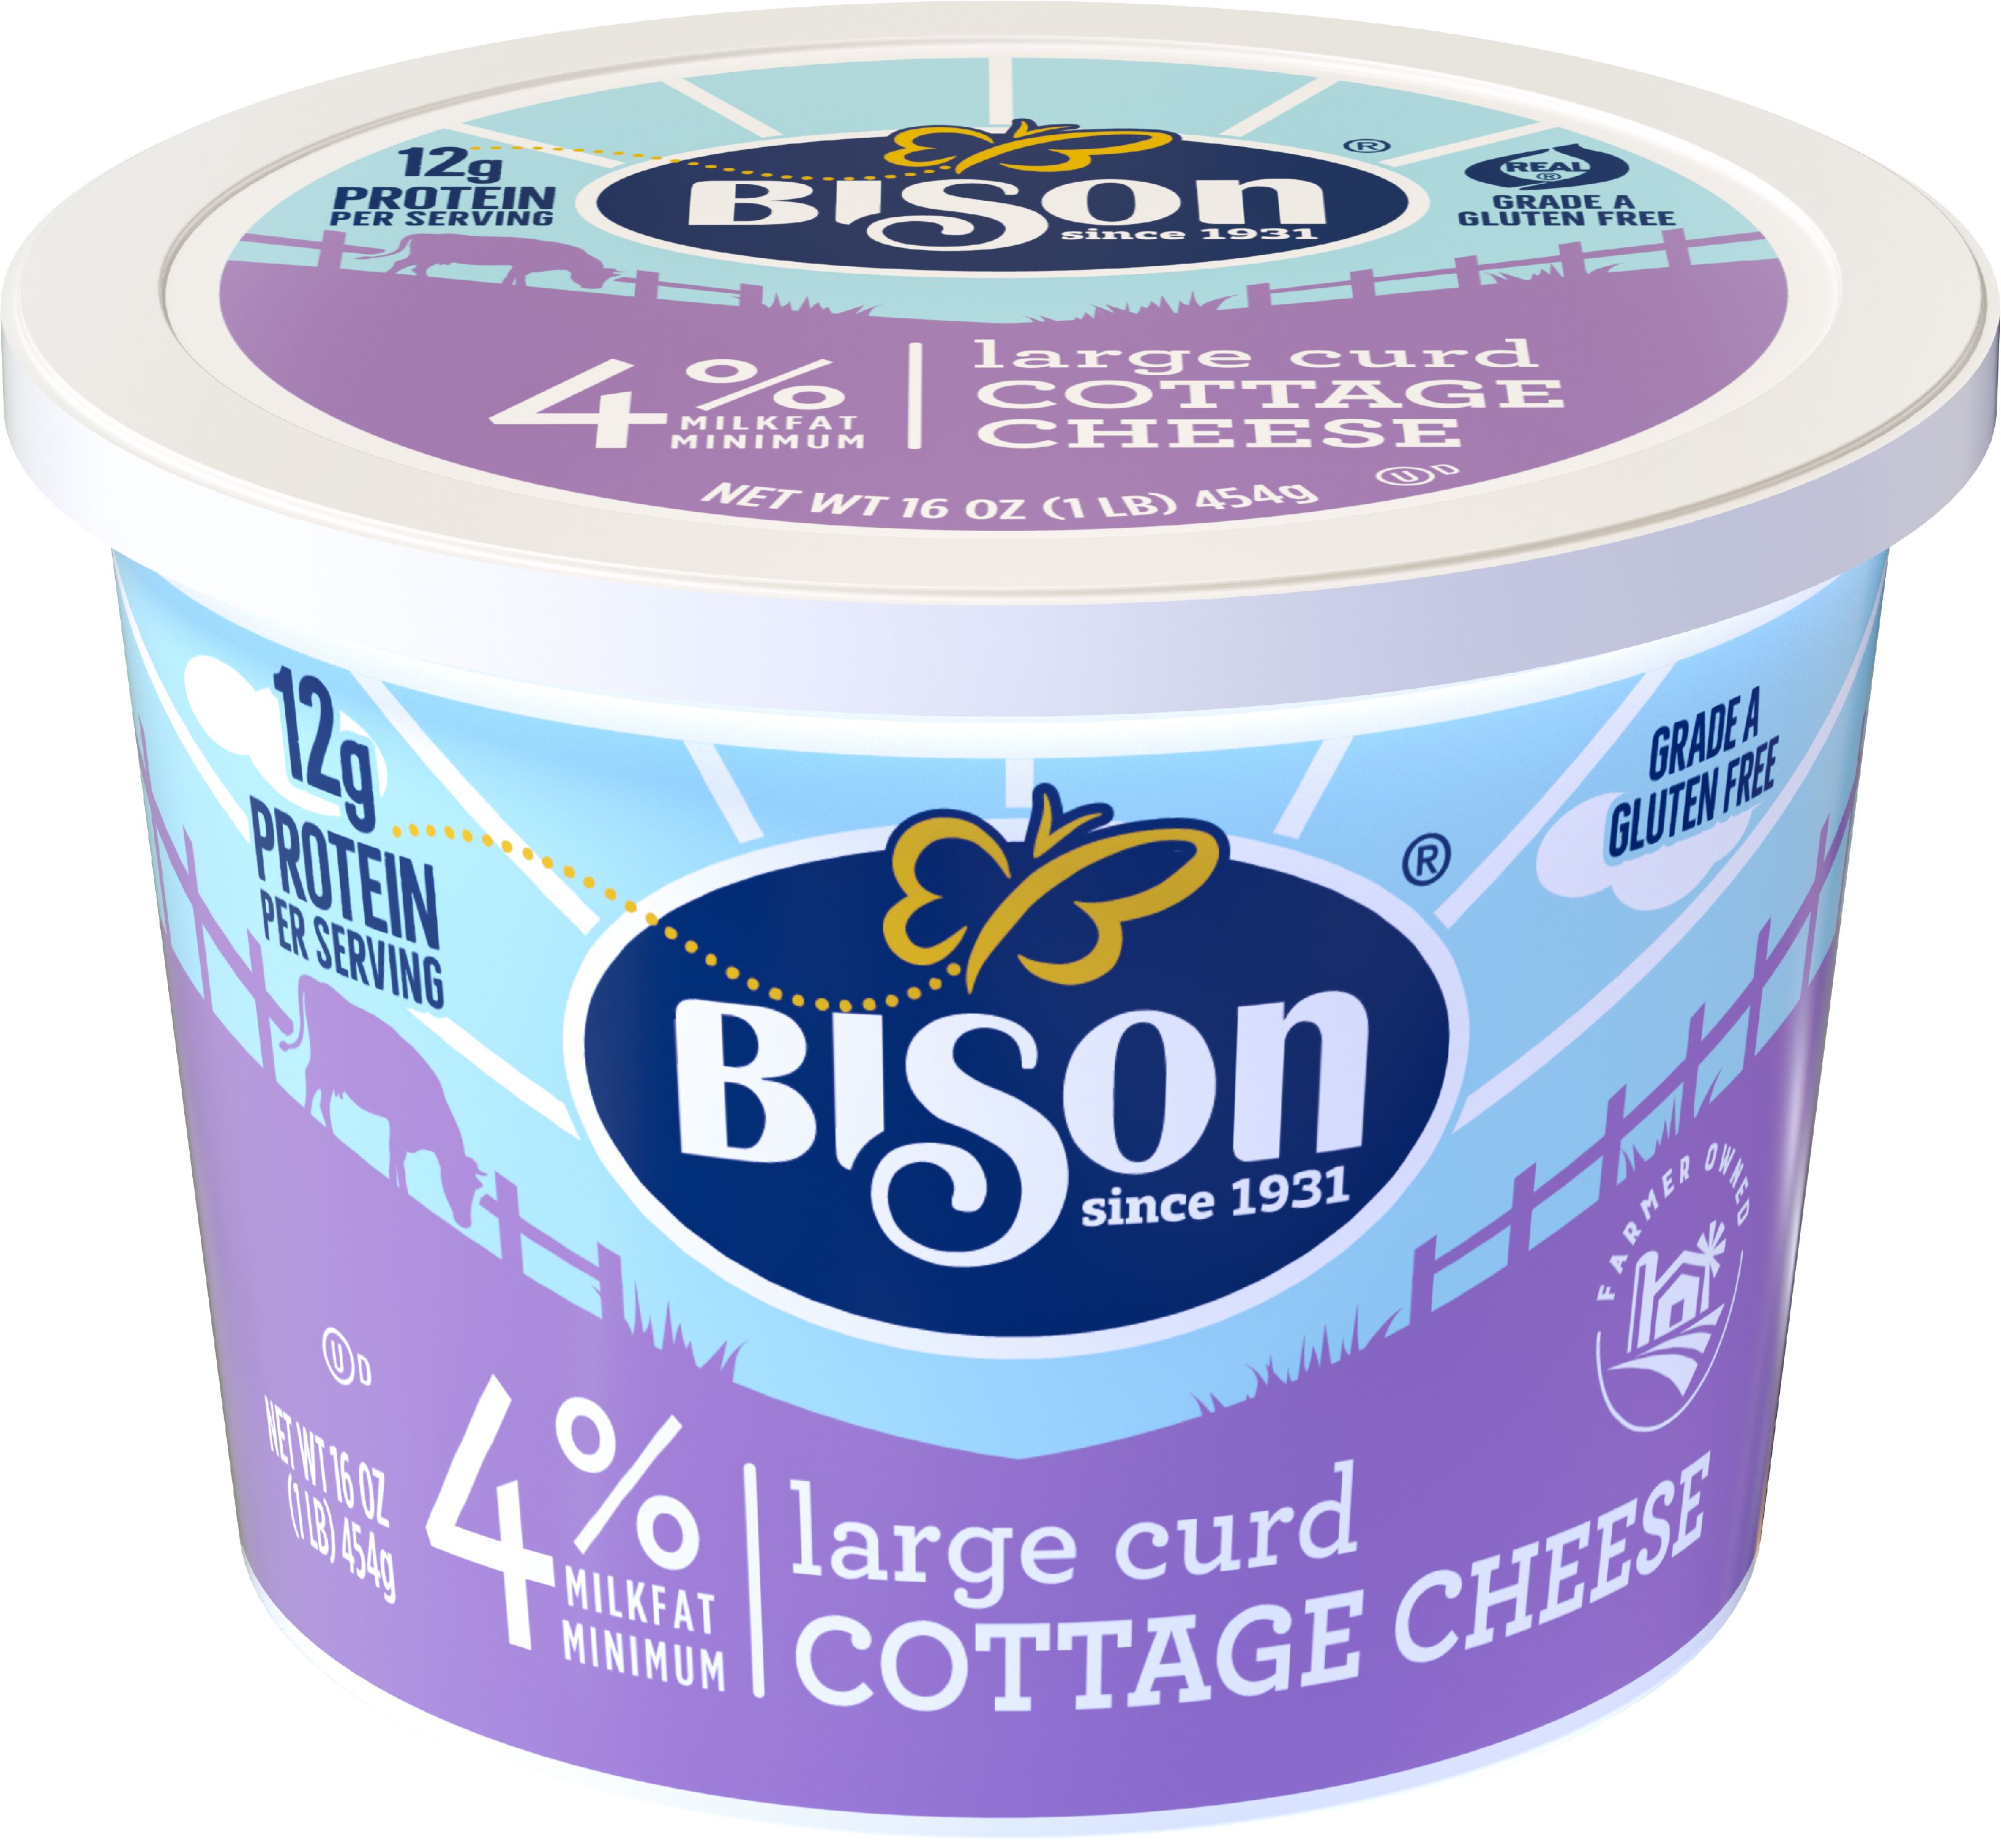 Bison 4% Milkfat Large Curd Cottage Cheese,16 oz - image 1 of 9